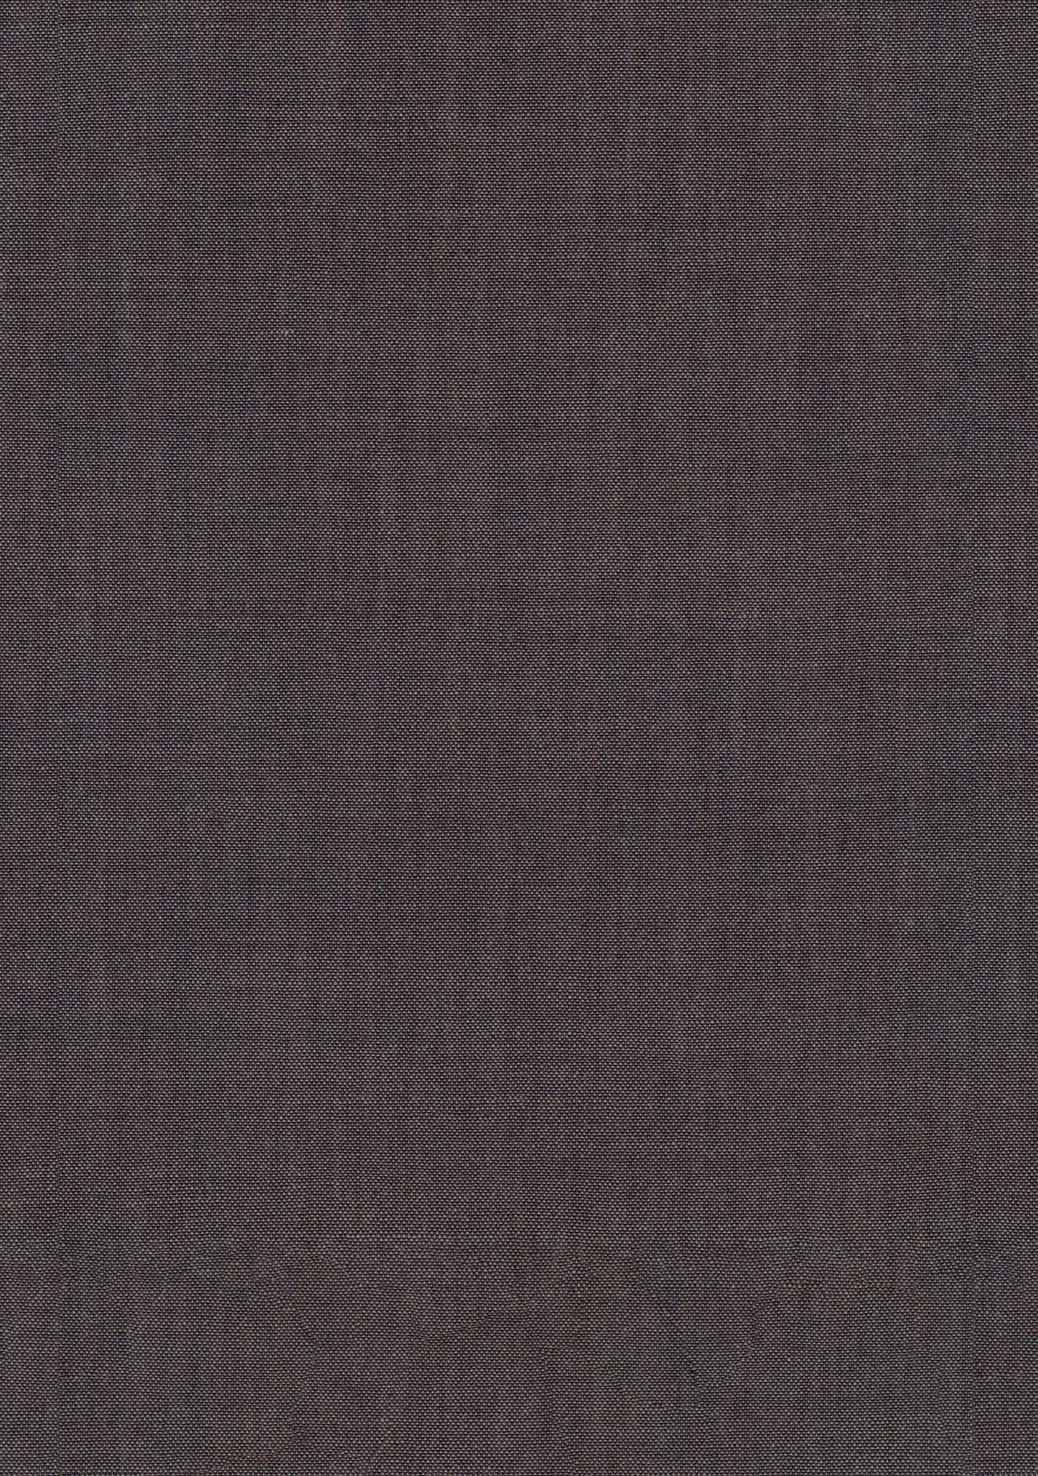 Fabric sample Remix 3 266 brown